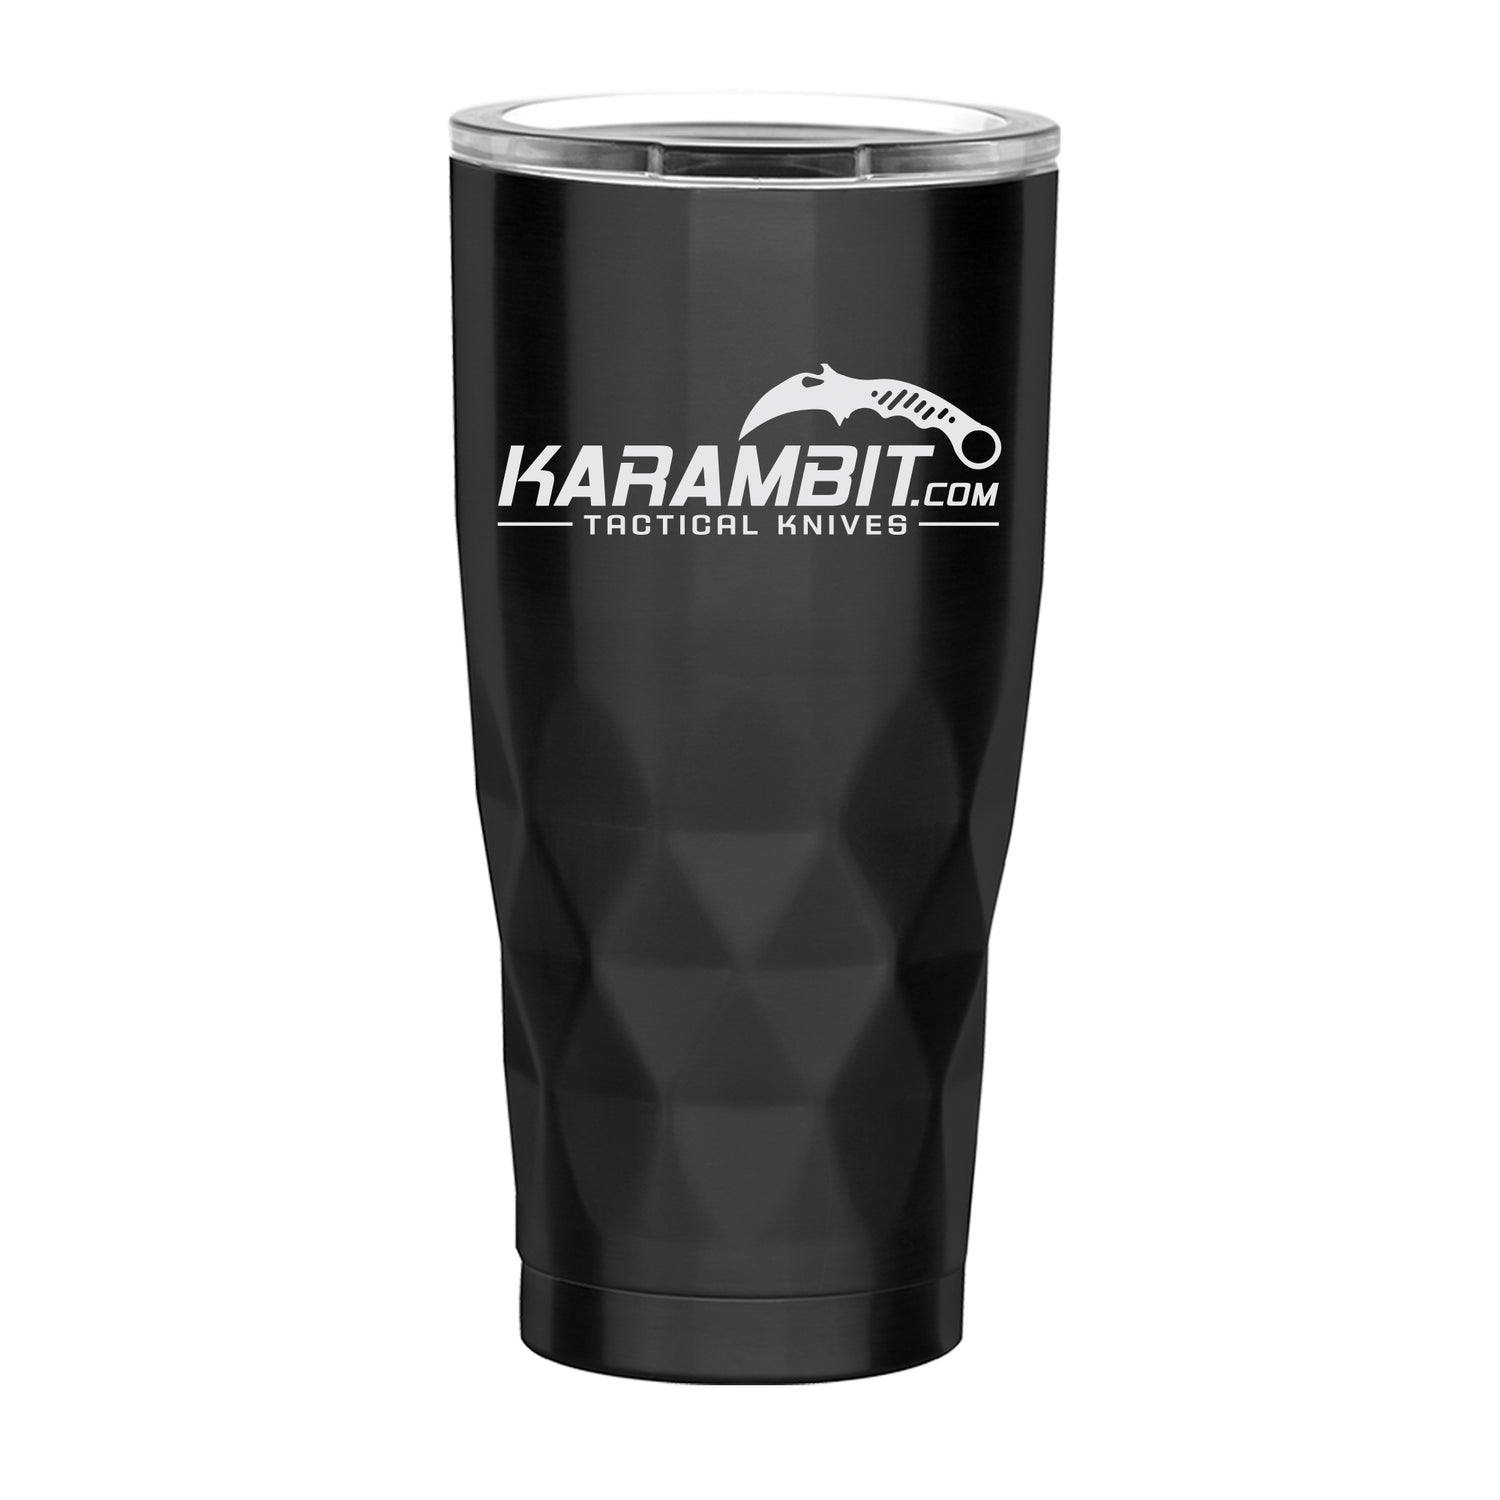 Karambit.com 20 oz. Stainless Steel Tumbler